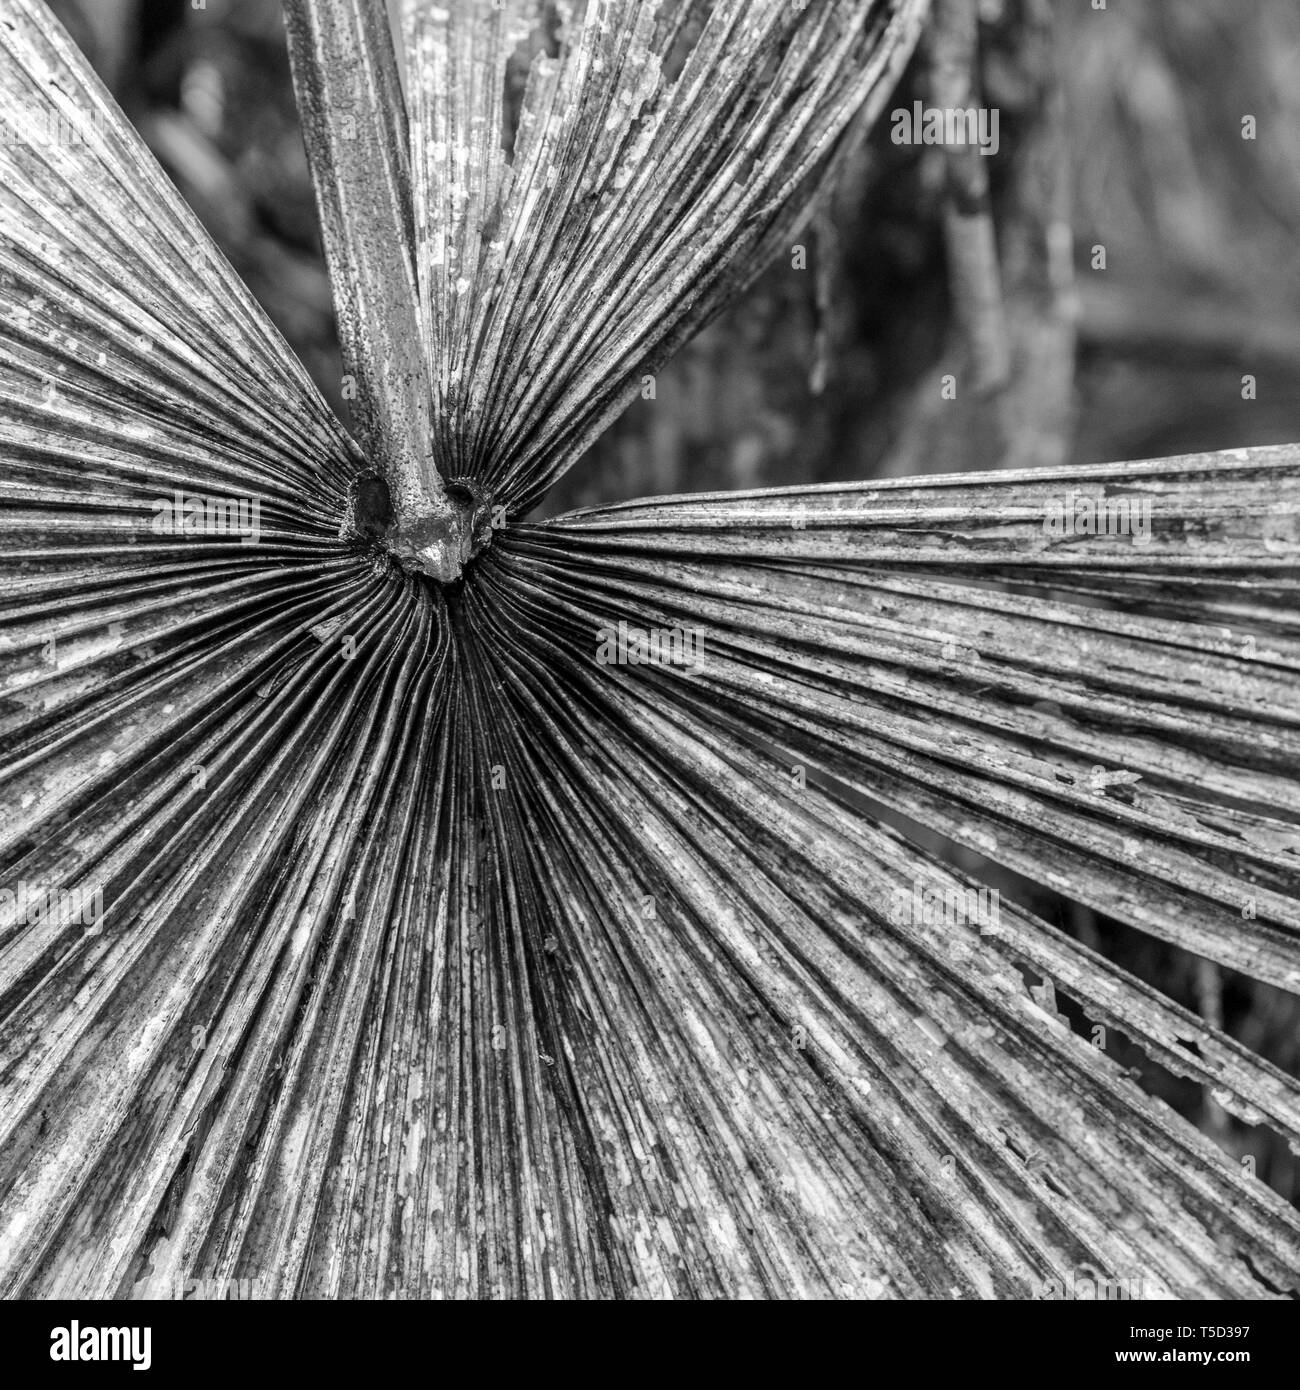 Palm fern in Daintree rainforest, Daintree National Park, Queensland, Australia Stock Photo